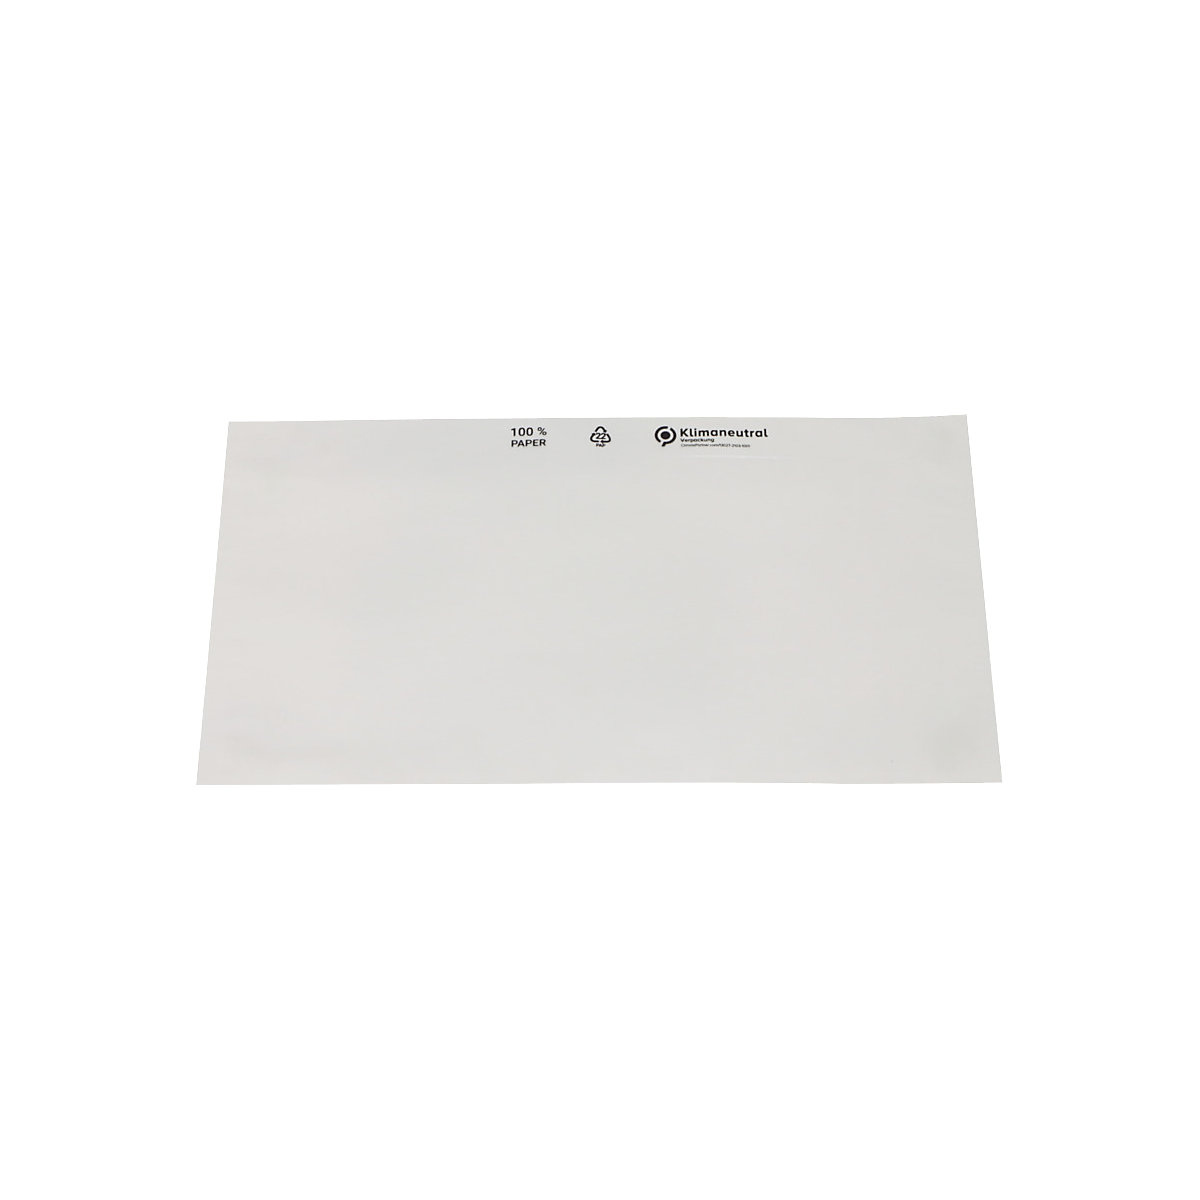 Dokumententaschen aus Papier terra, Transparent, VE 1000 Stk, LxB 240 x 131 mm, ab 5 VE-1